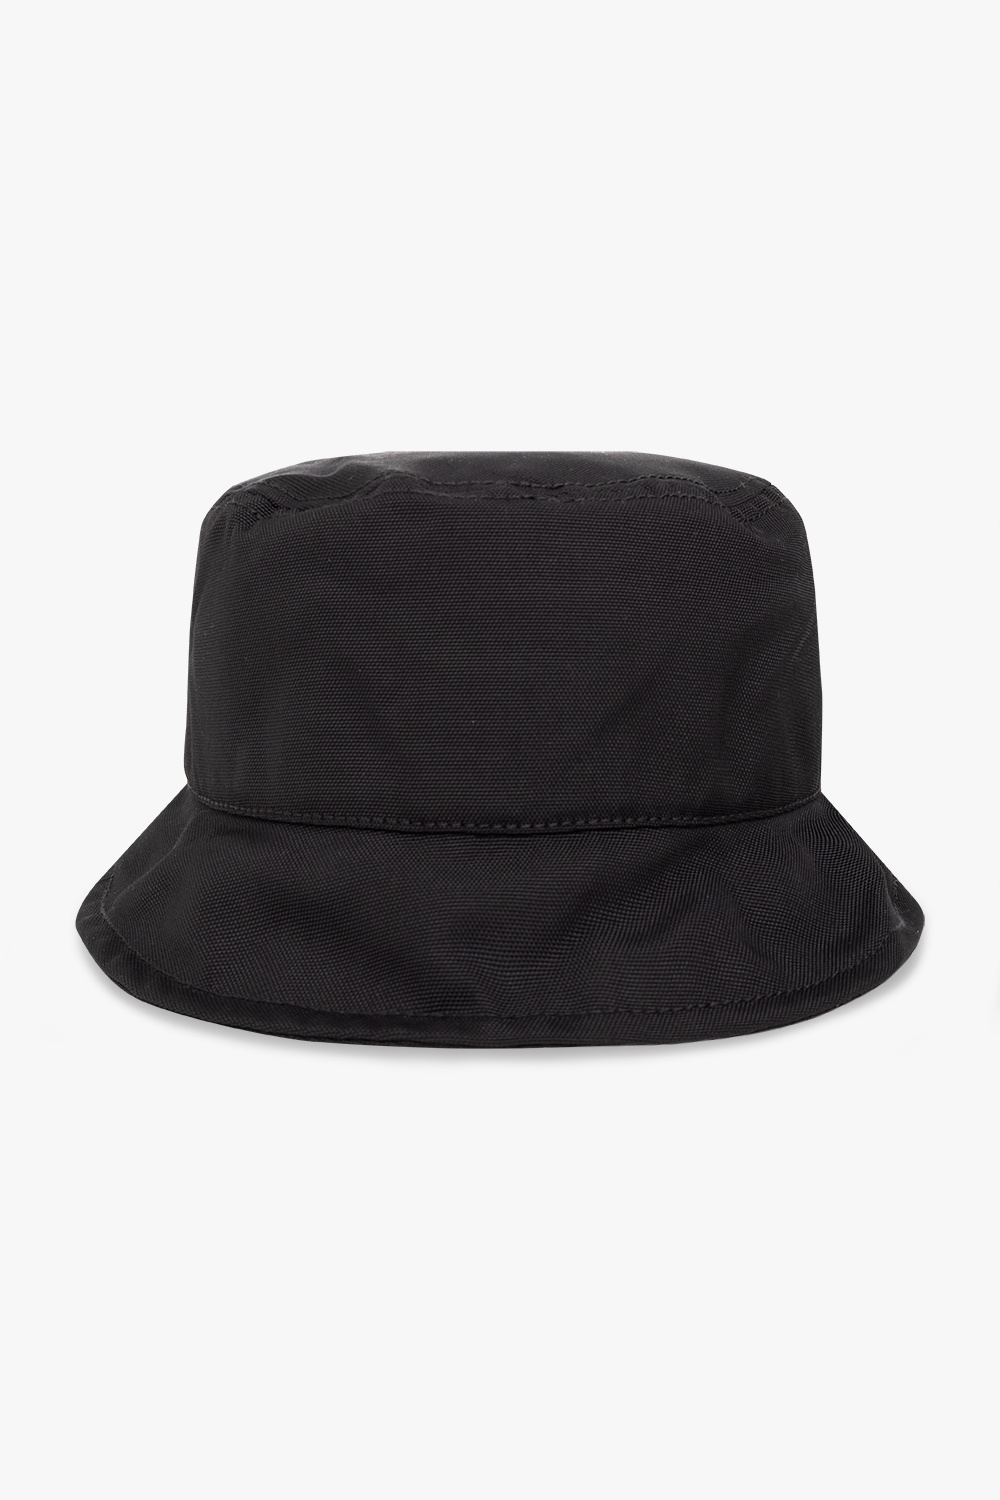 IetpShops Croatia - Black Fisherman hat with logo 44 Label Group